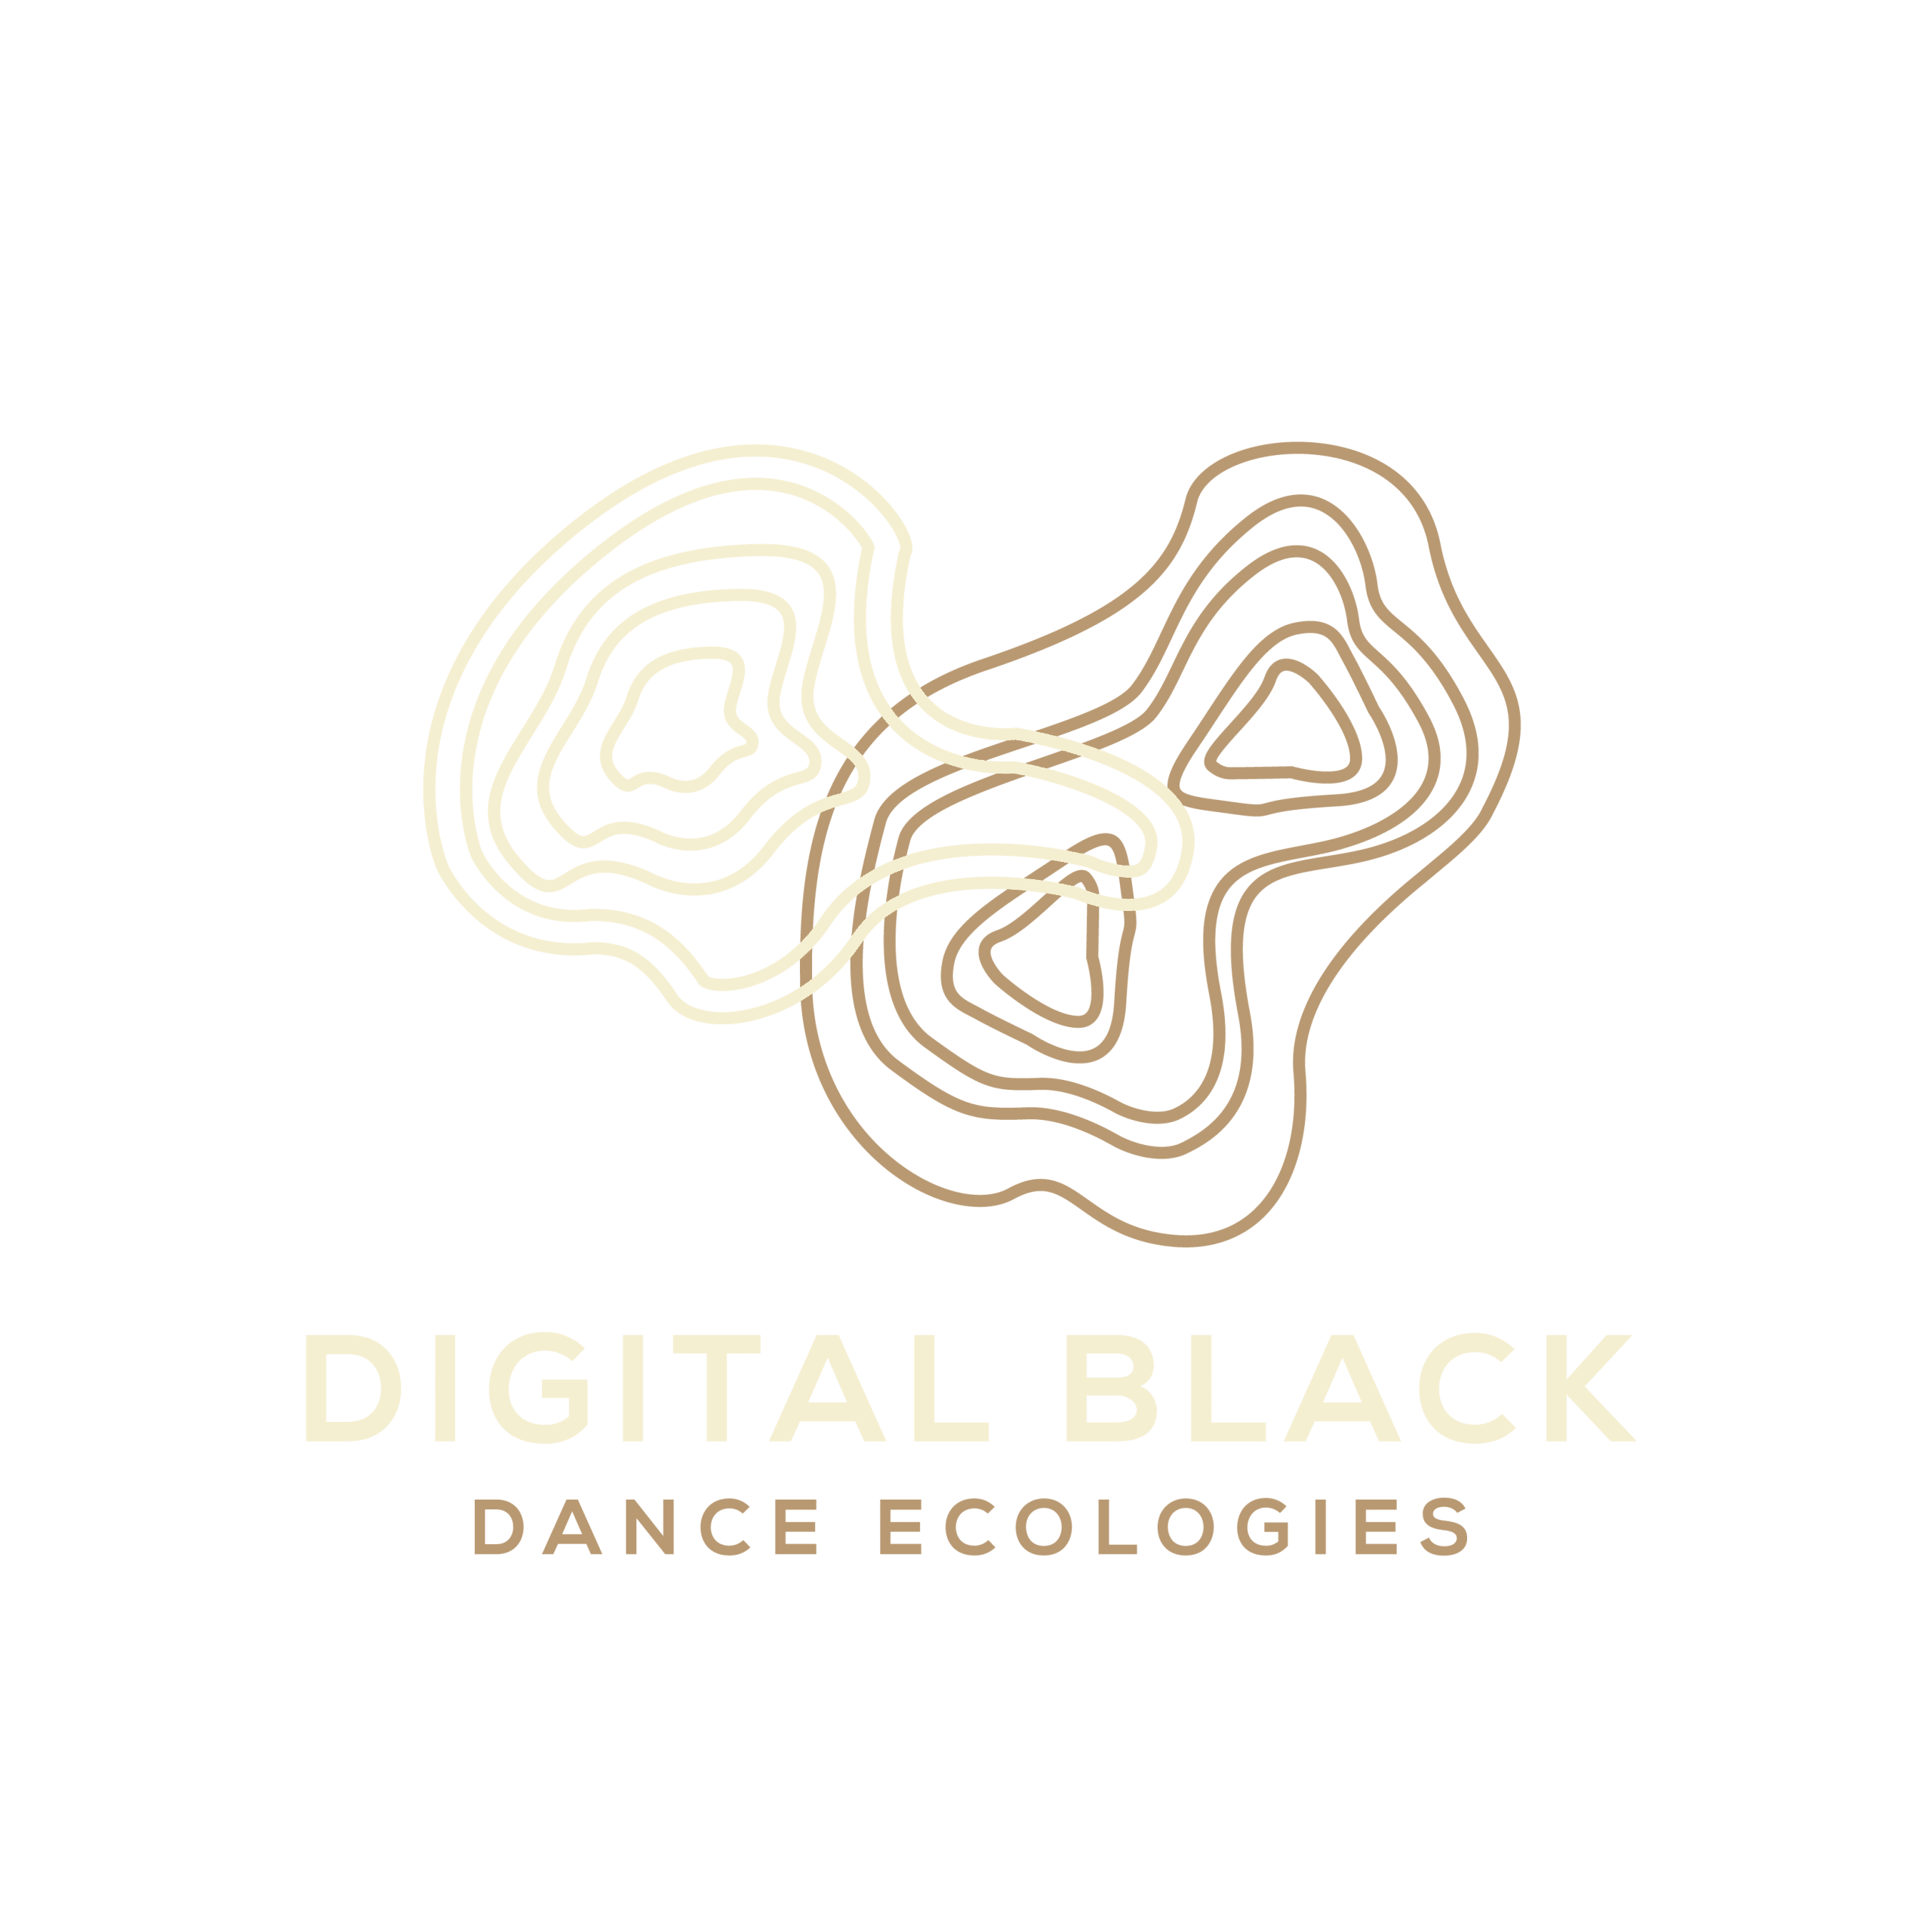 Digital Black Dance Ecologies